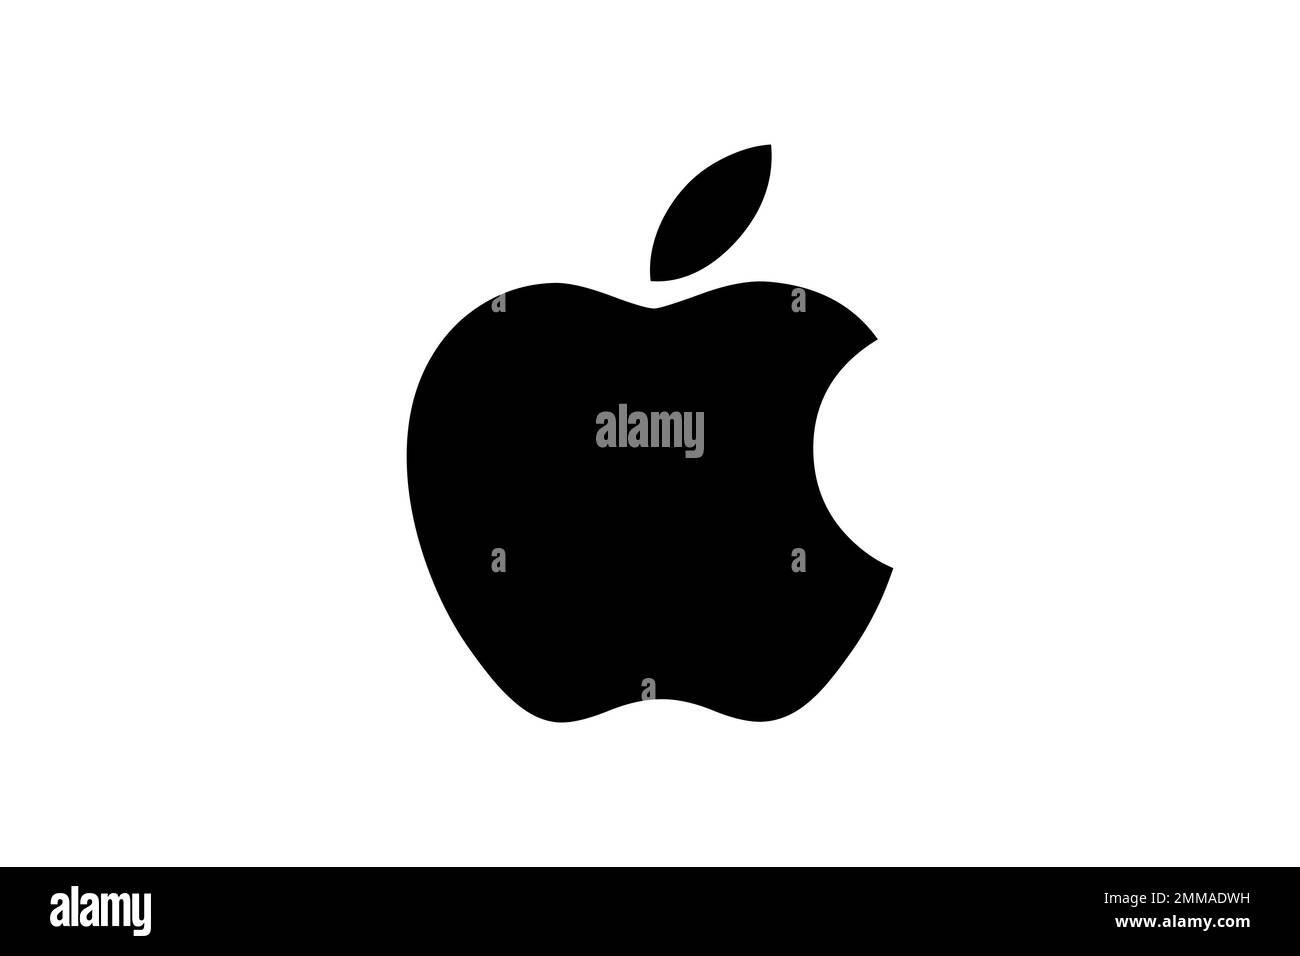 Apple Inc, white background, logo, brand name Stock Photo